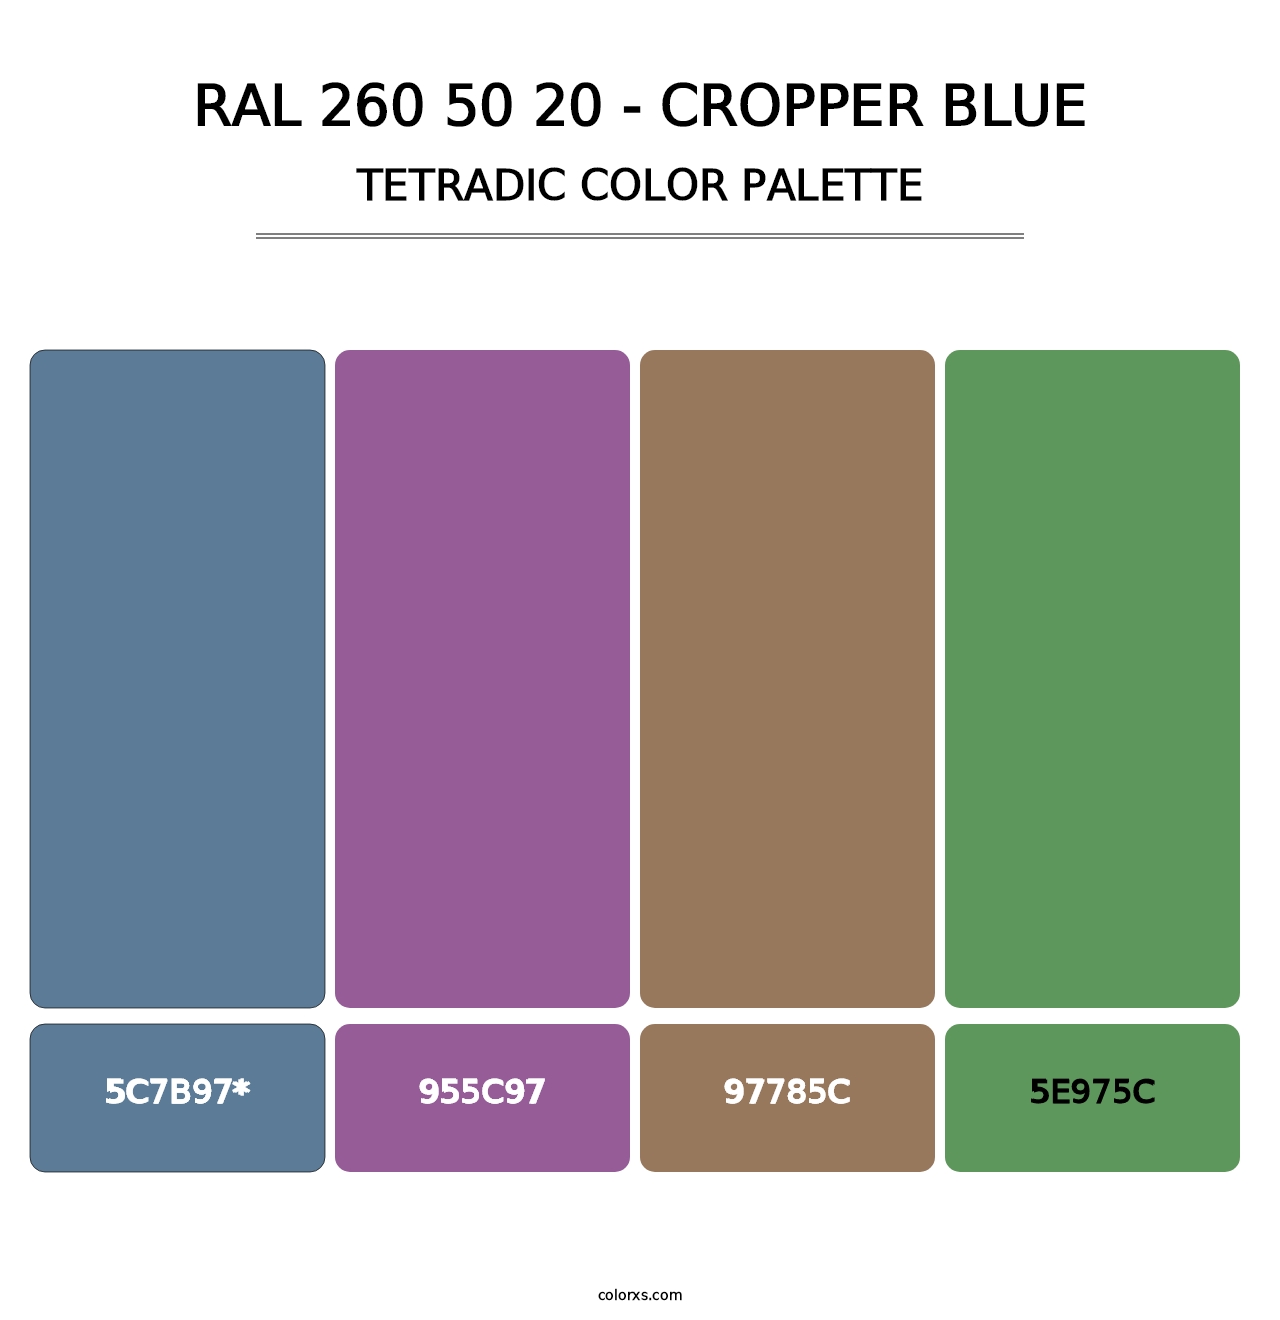 RAL 260 50 20 - Cropper Blue - Tetradic Color Palette